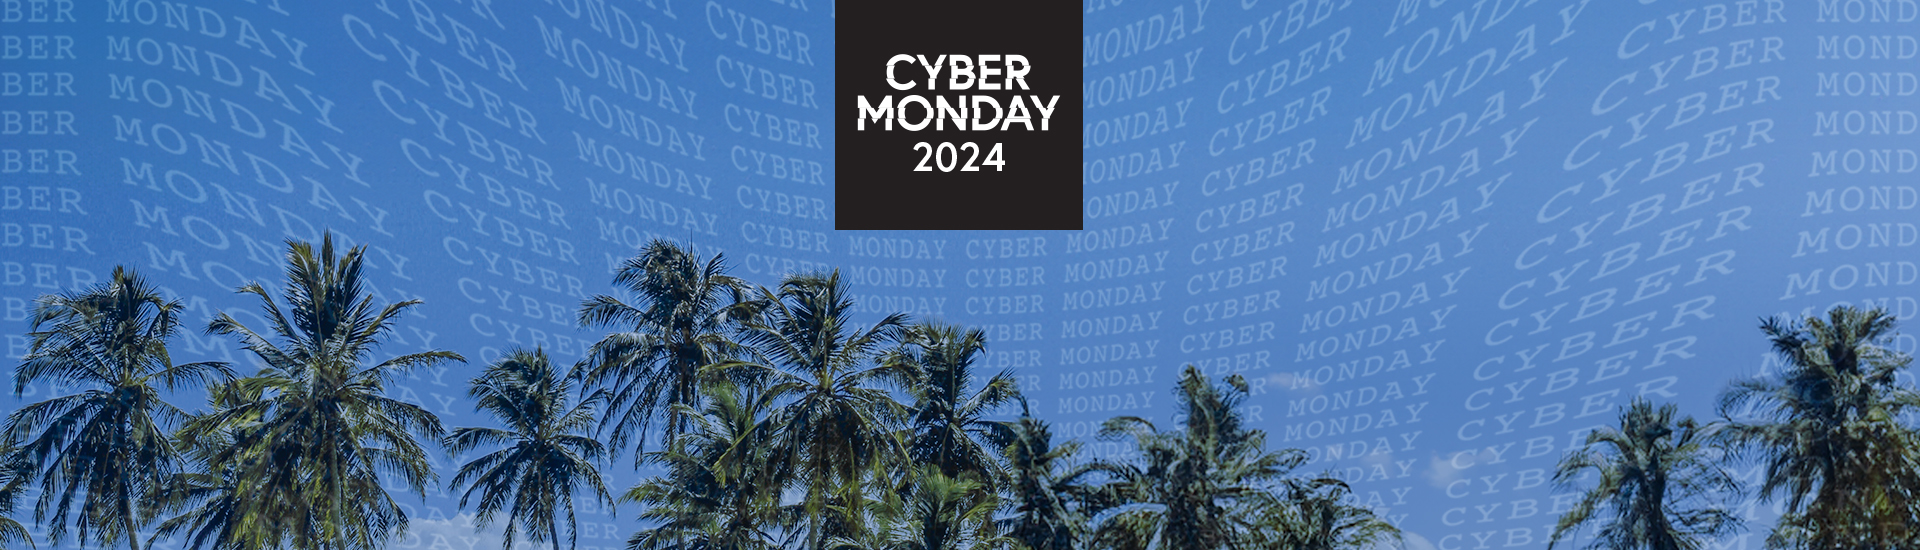 Cyber Monday 2024 Countdown